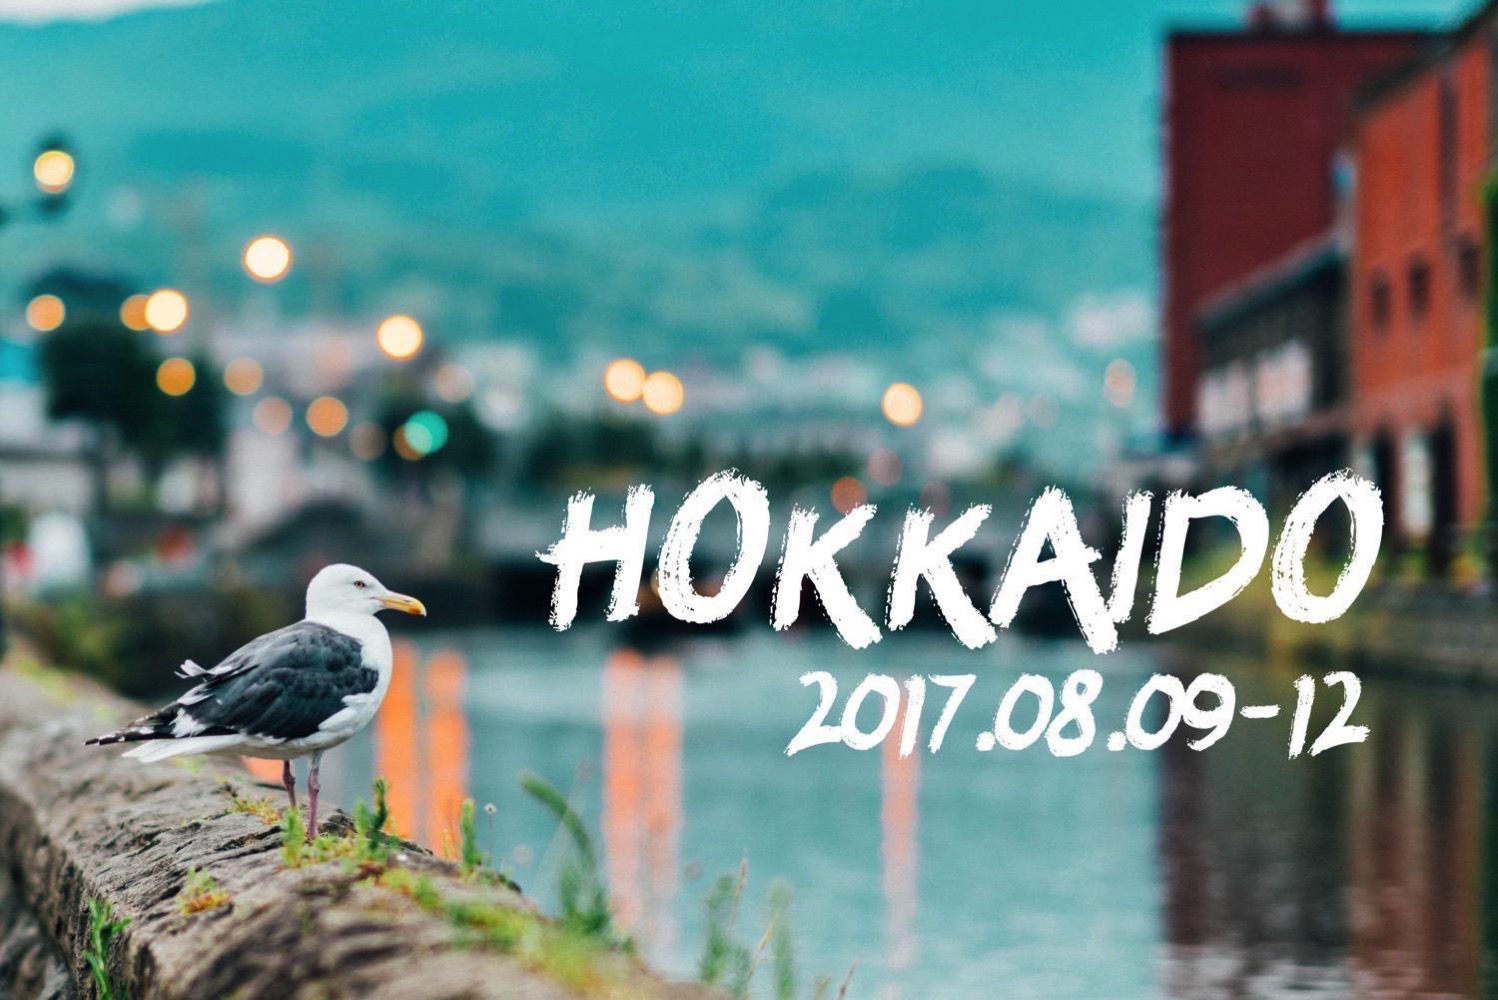 Hokkaido trip 2017 23